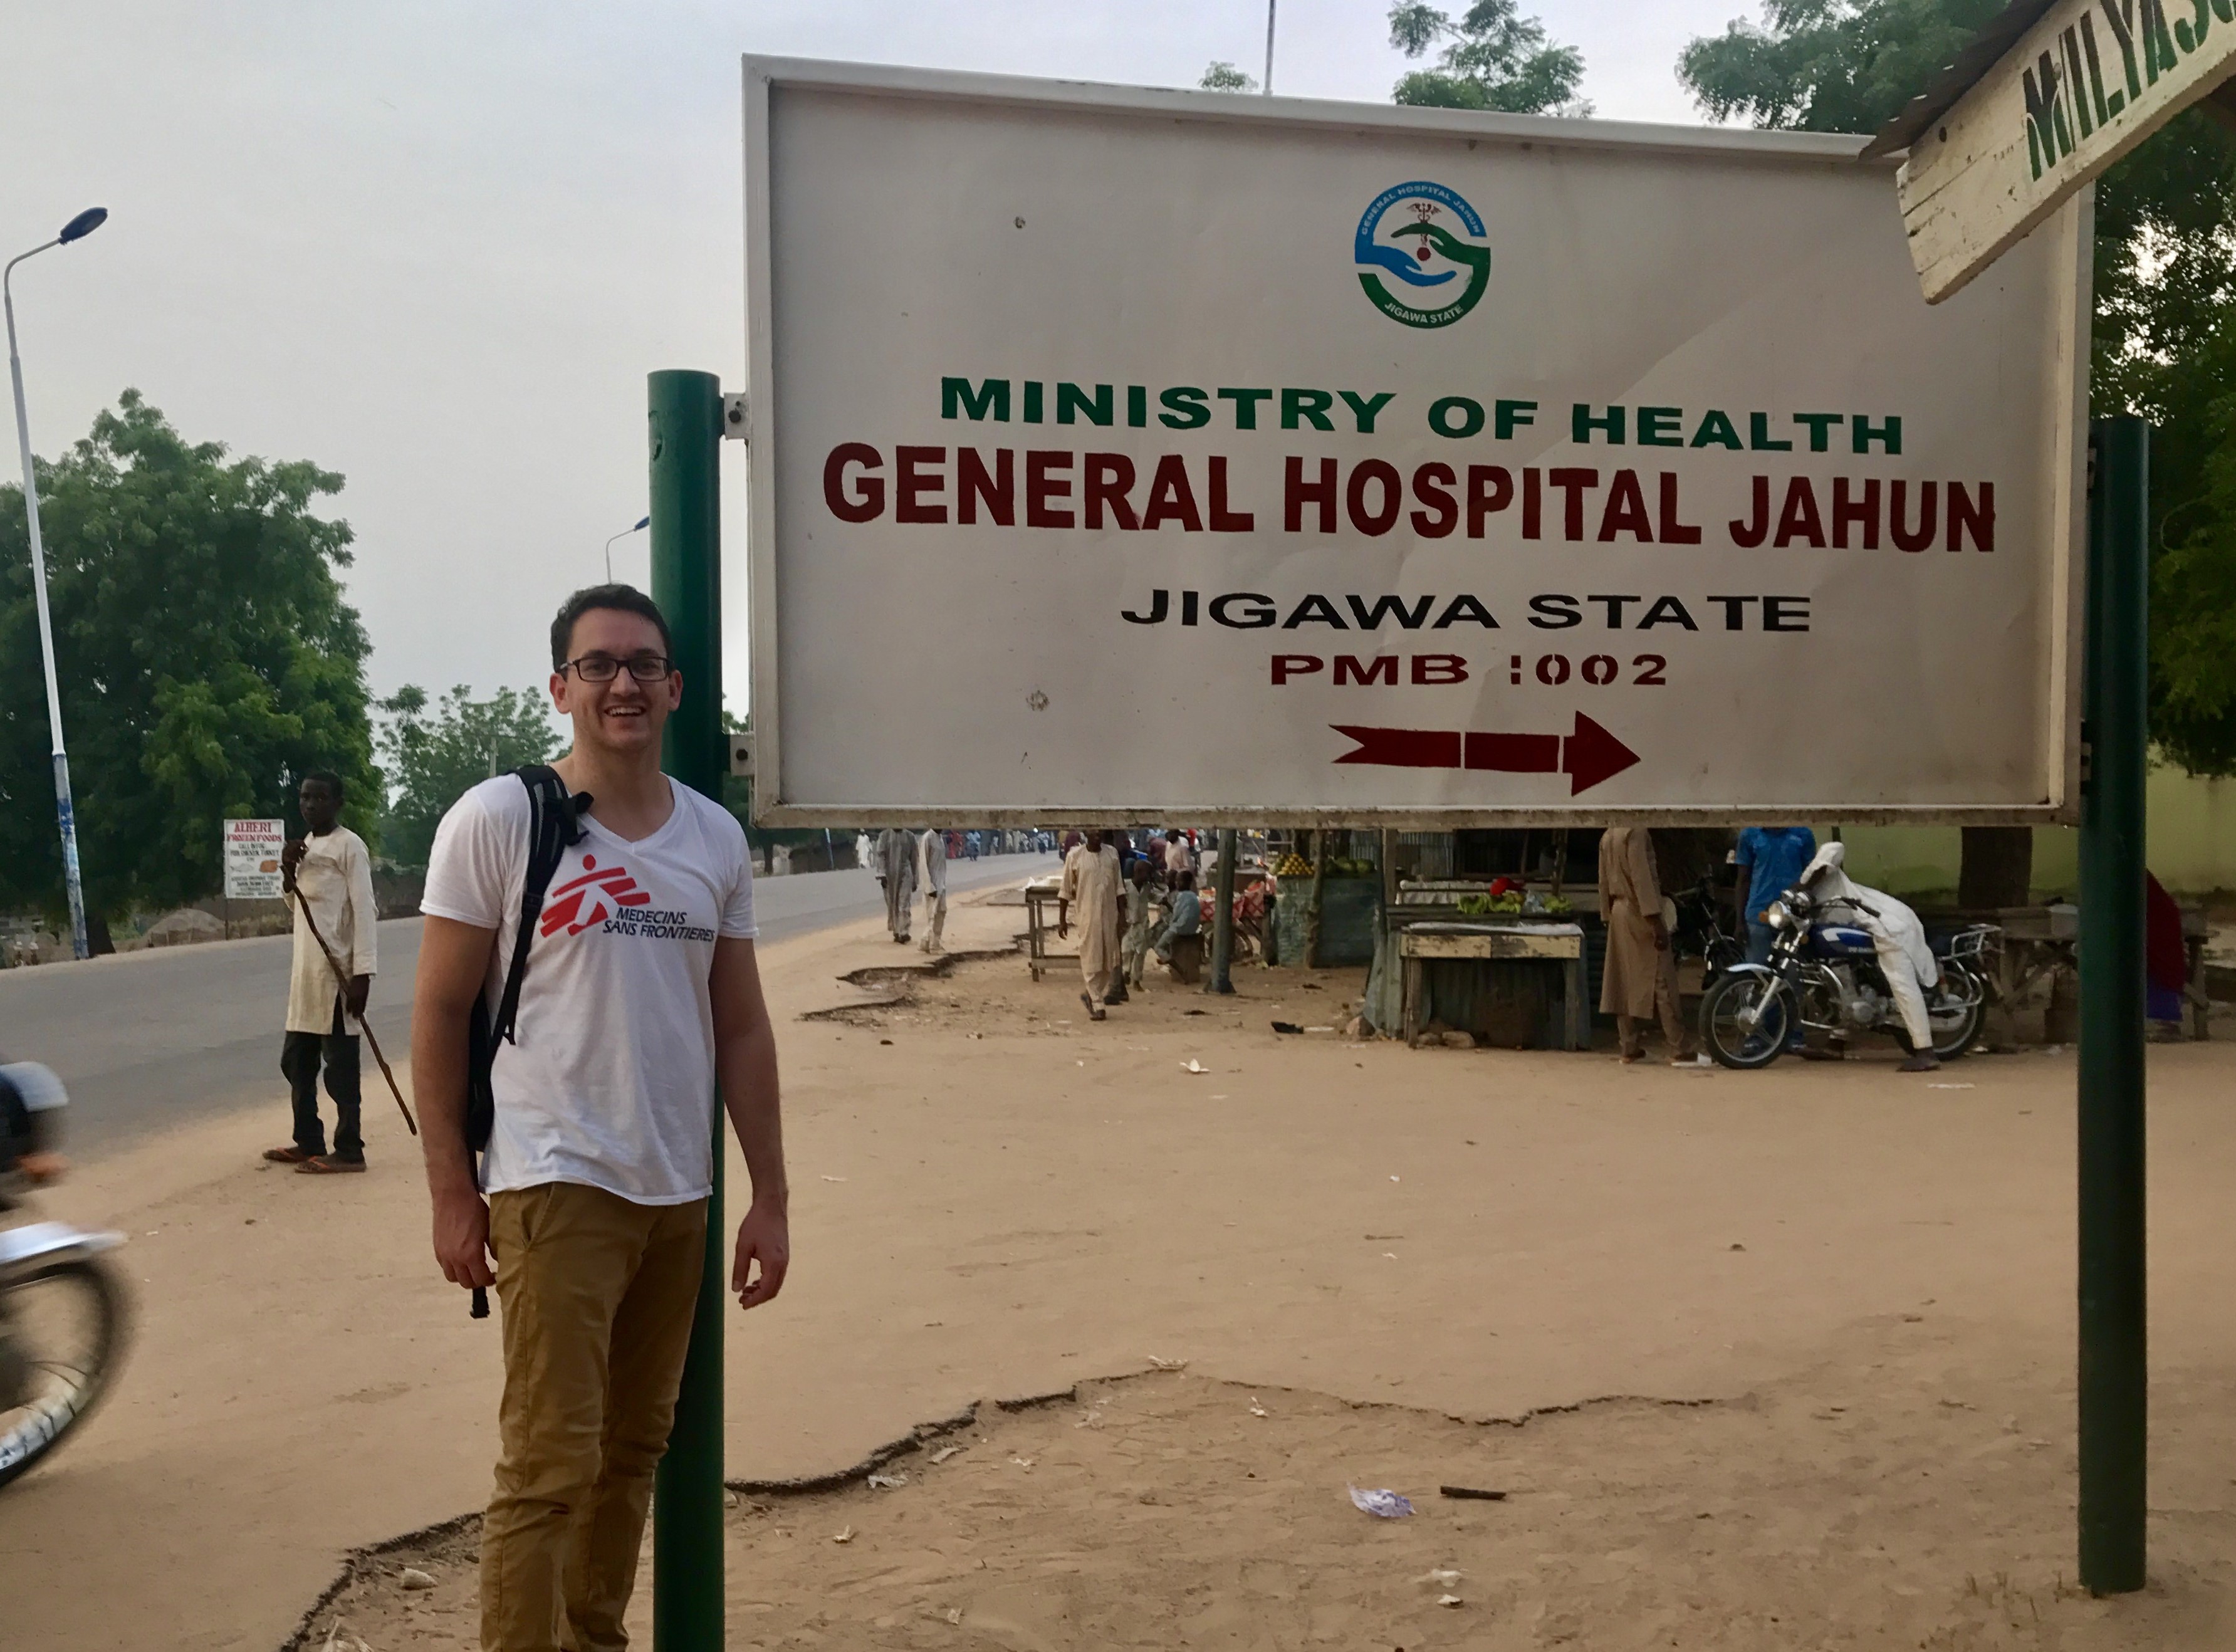 Jared outside Jahun general hospital, in northern Nigeria